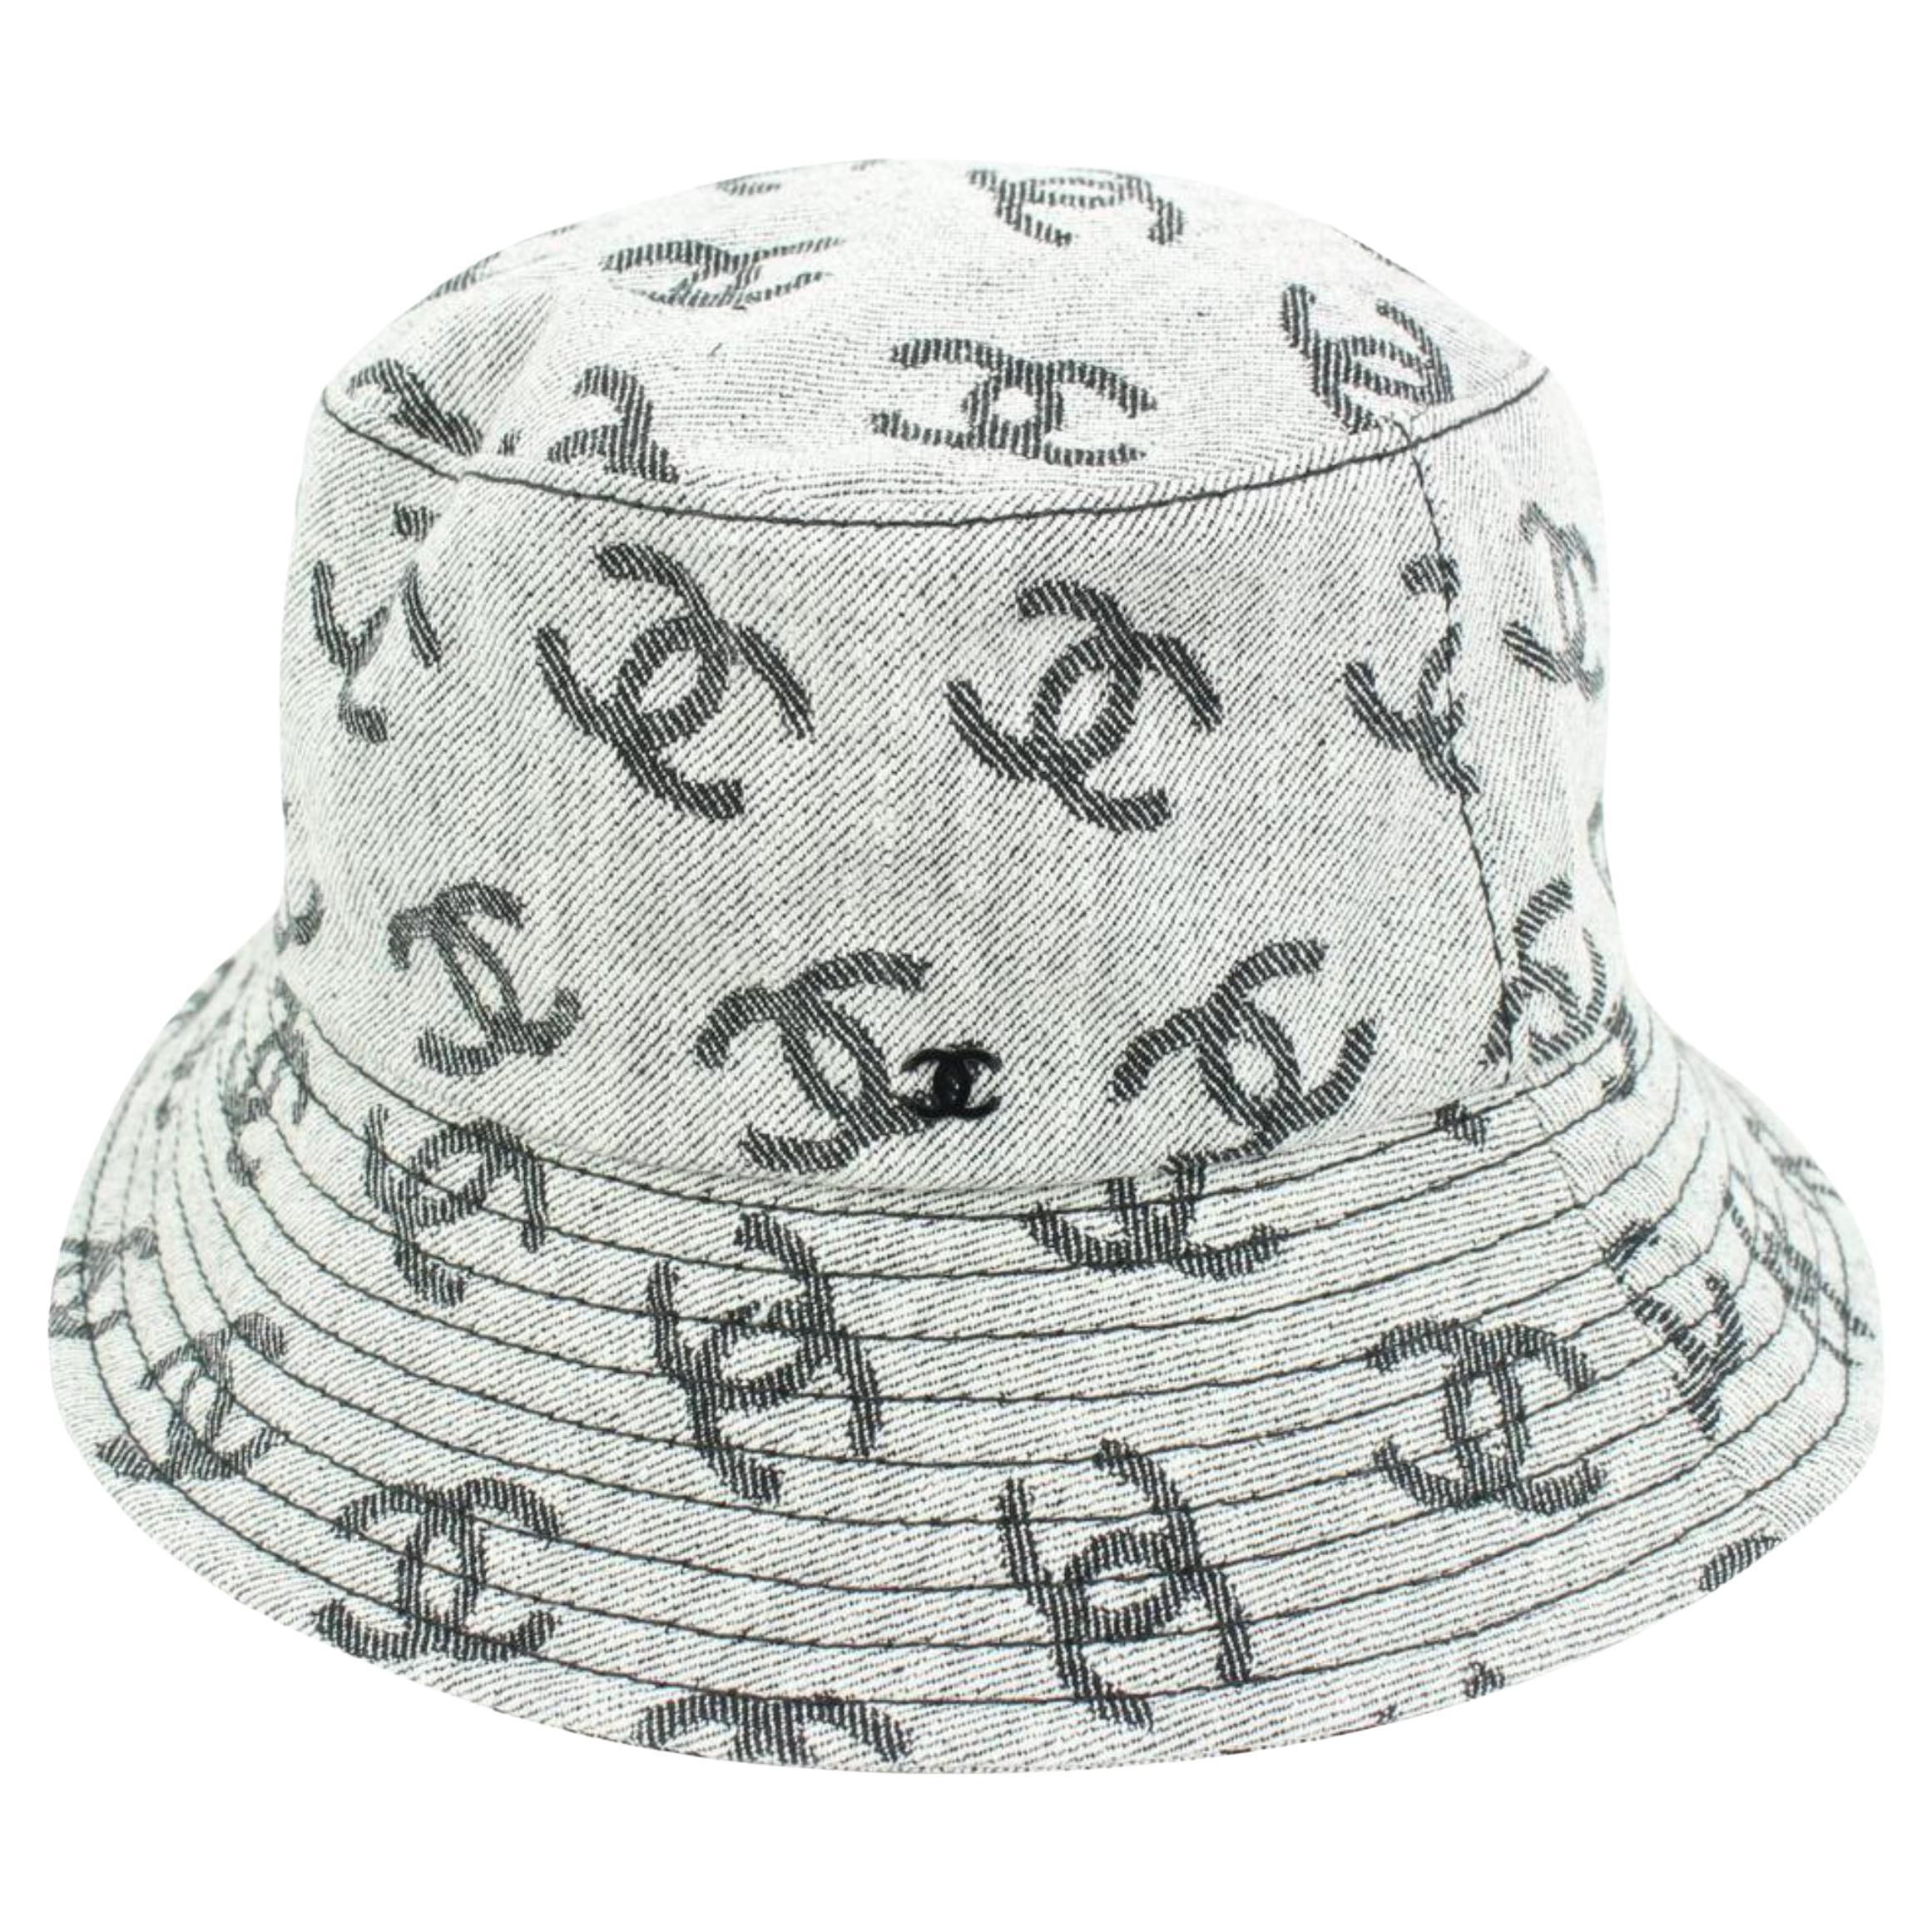 chanel bucket hat